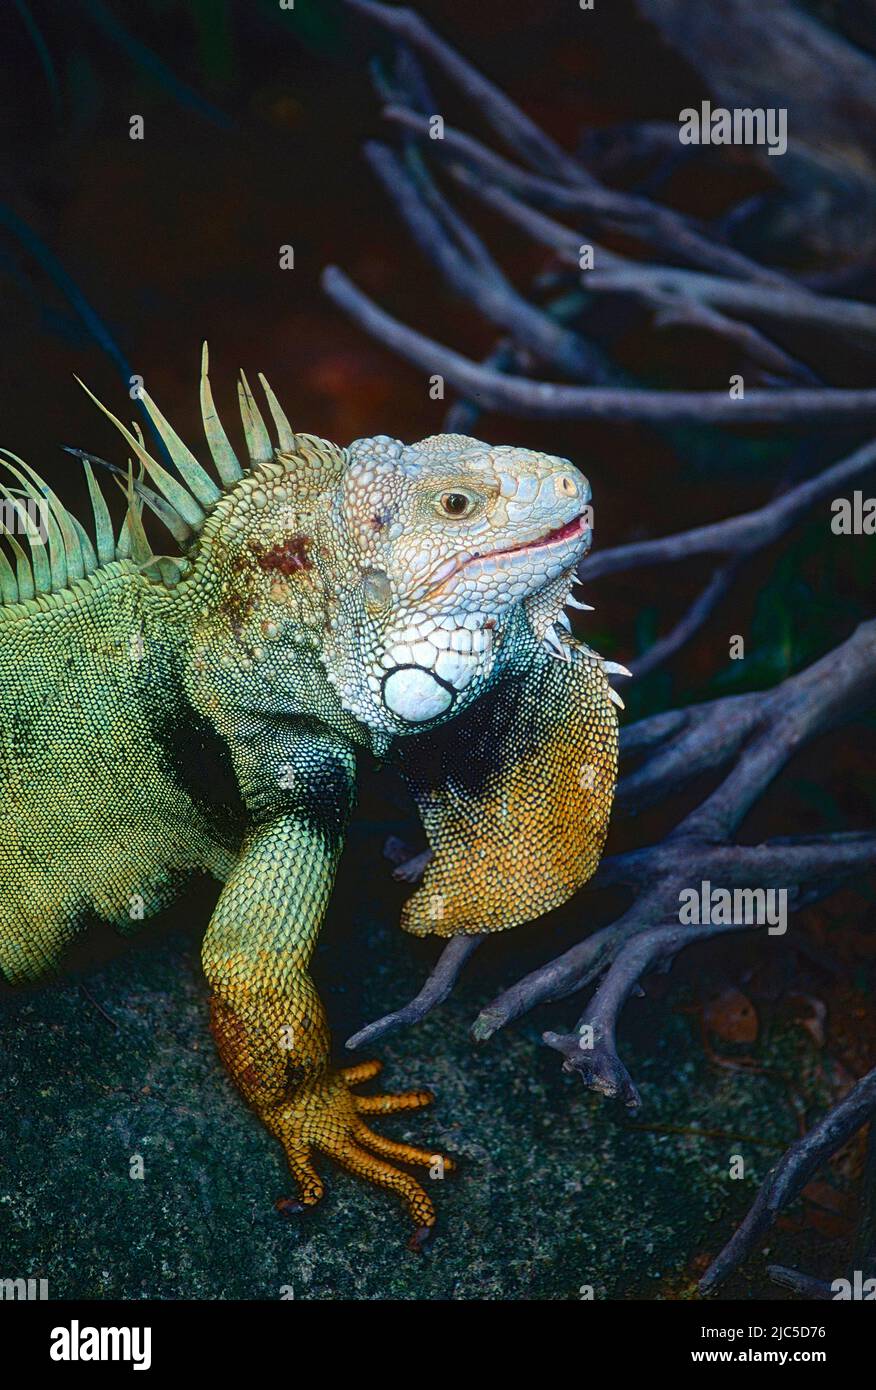 Leguan, Iguana spec., Iguanidae, Männchen, Echse, Reptil, Tier, Zoo, Singapore Stock Photo